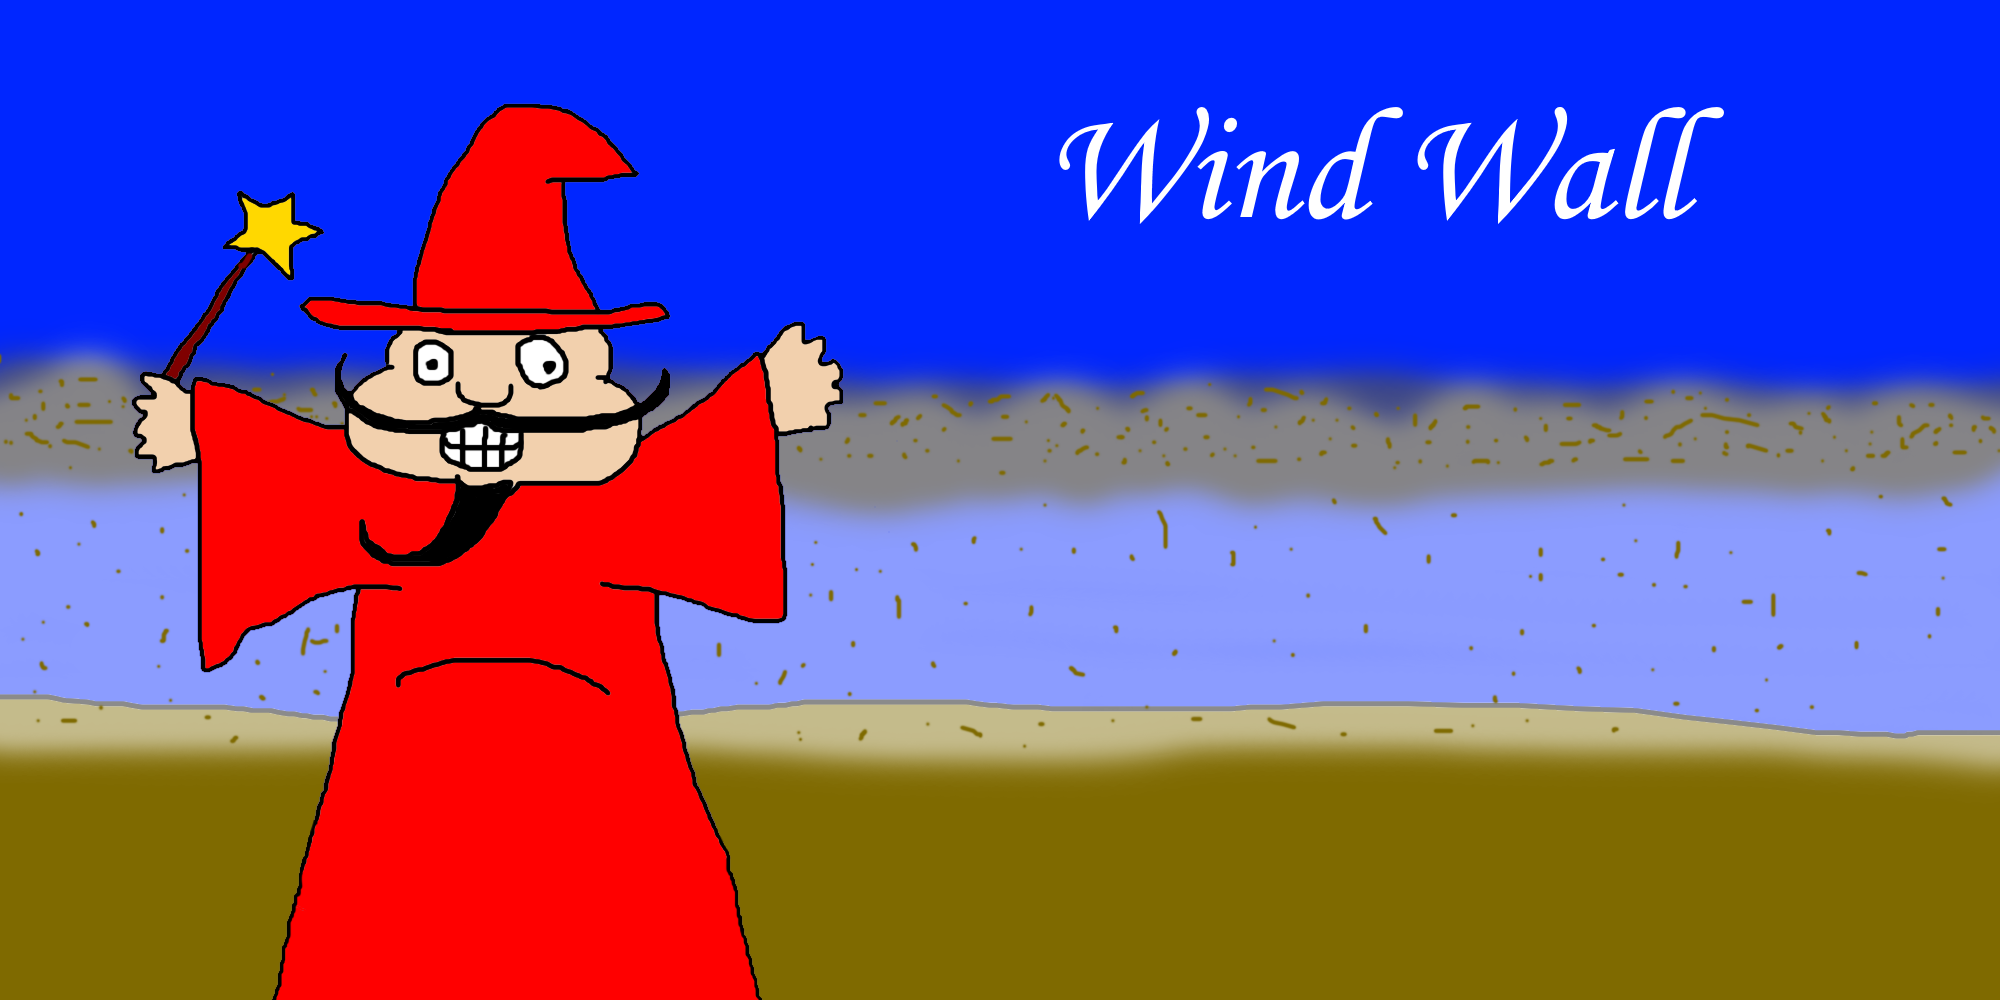 Wind Wall 5e: 'Tis Wind — Caverns